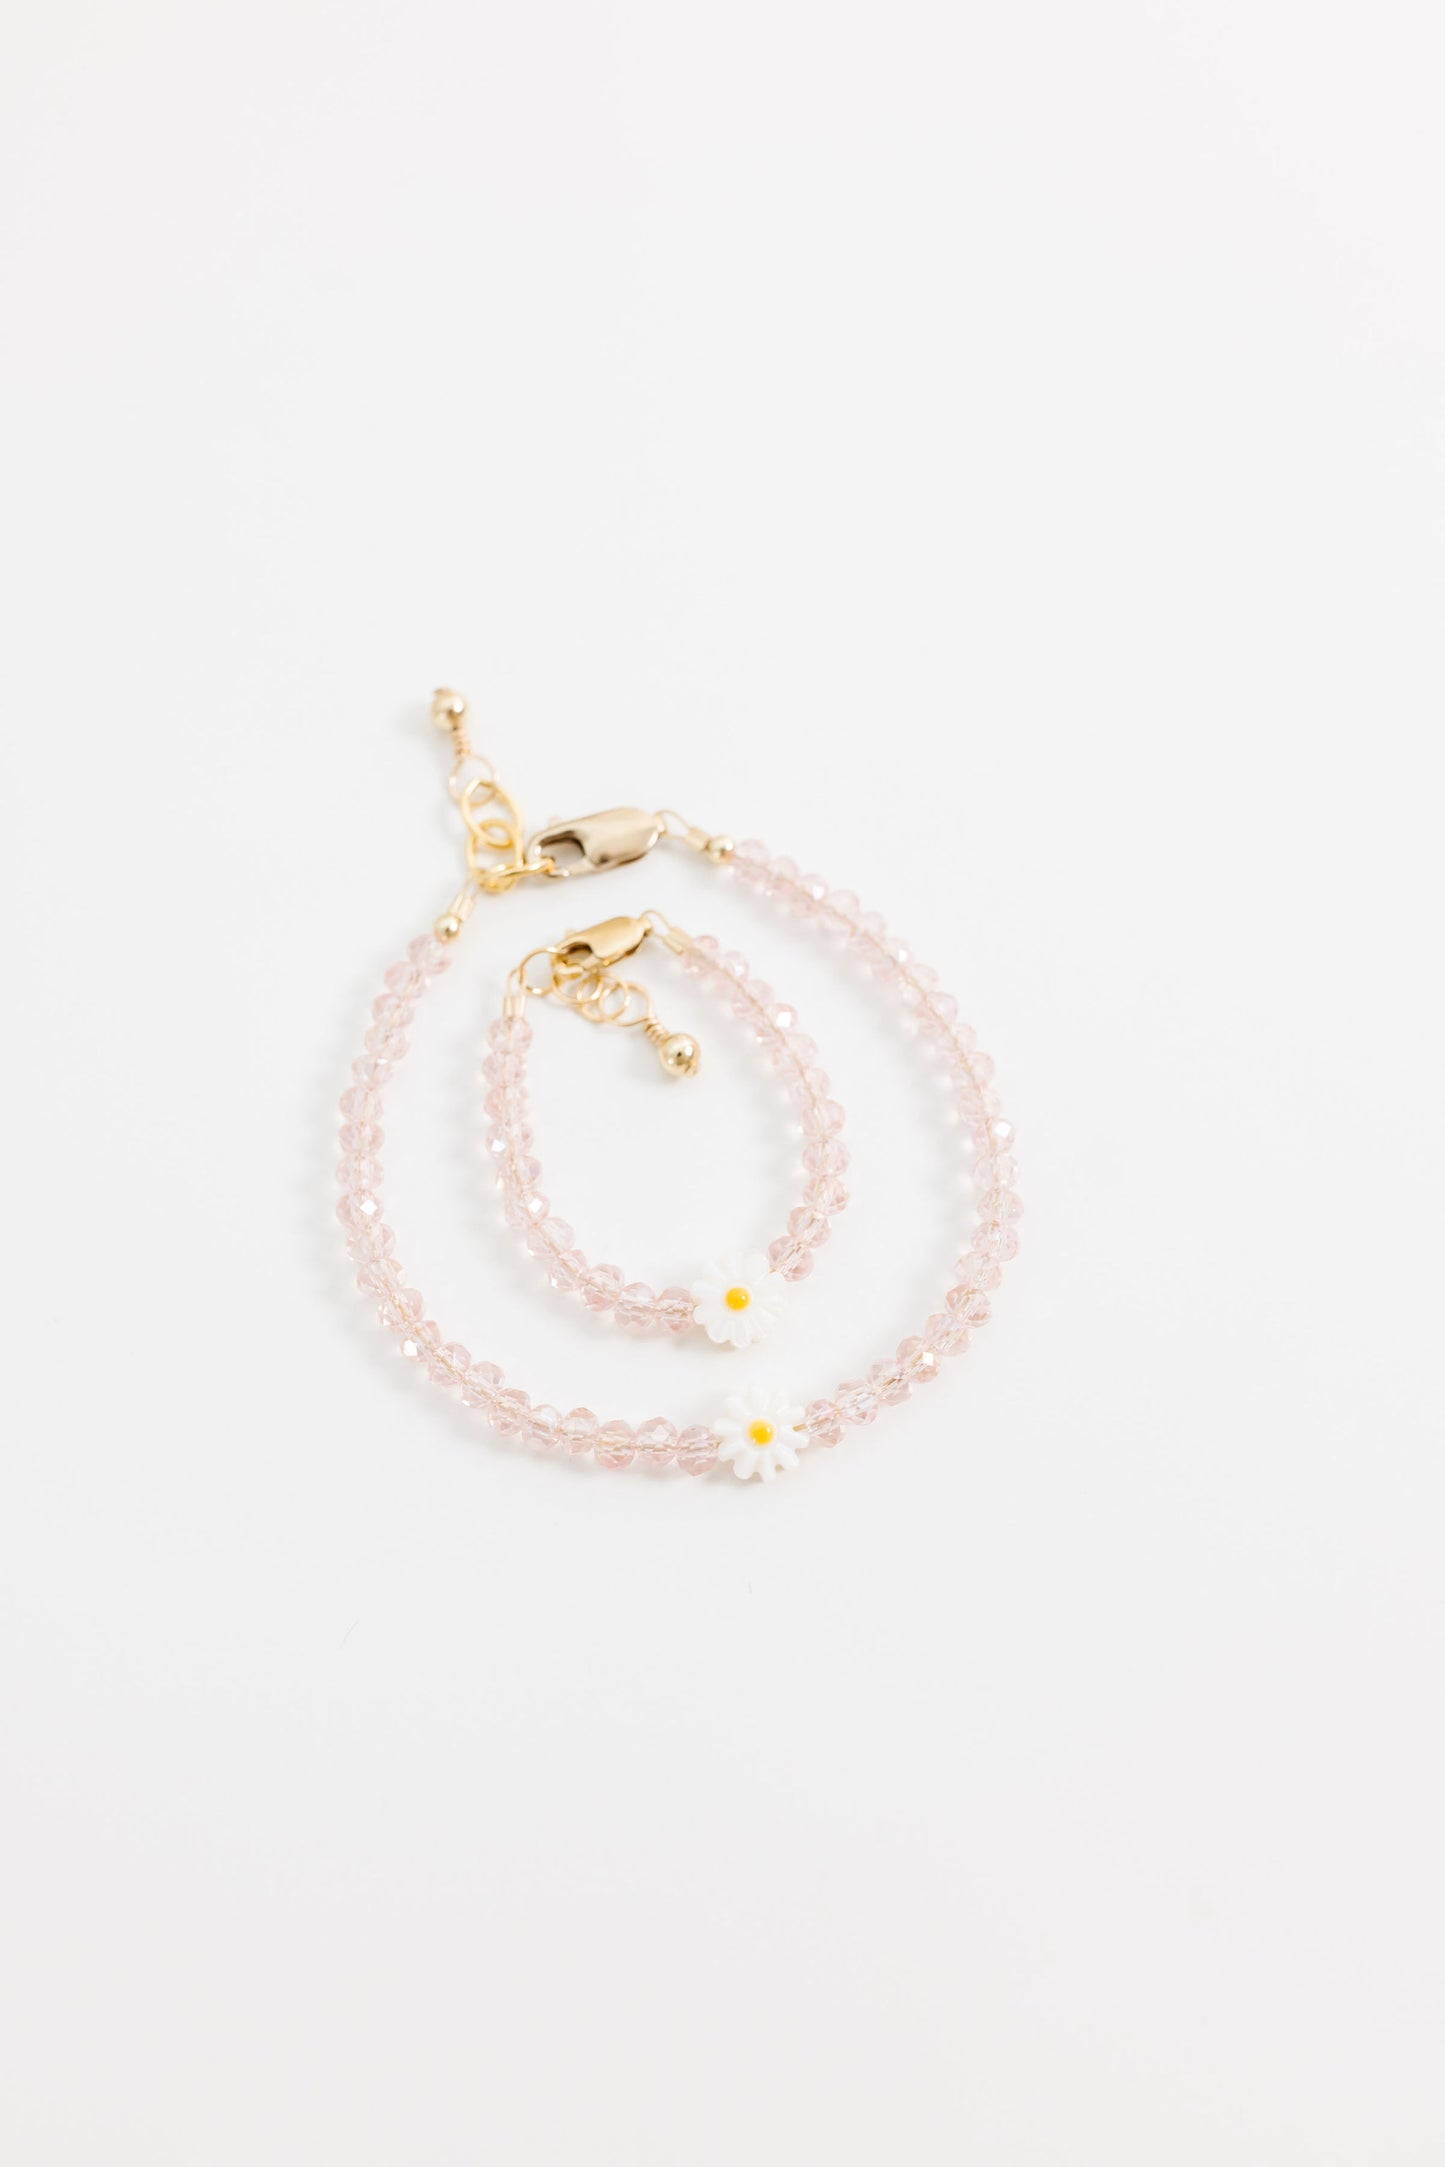 Daisy Mom + Mini Bracelet set (Blossom 4MM Beads)